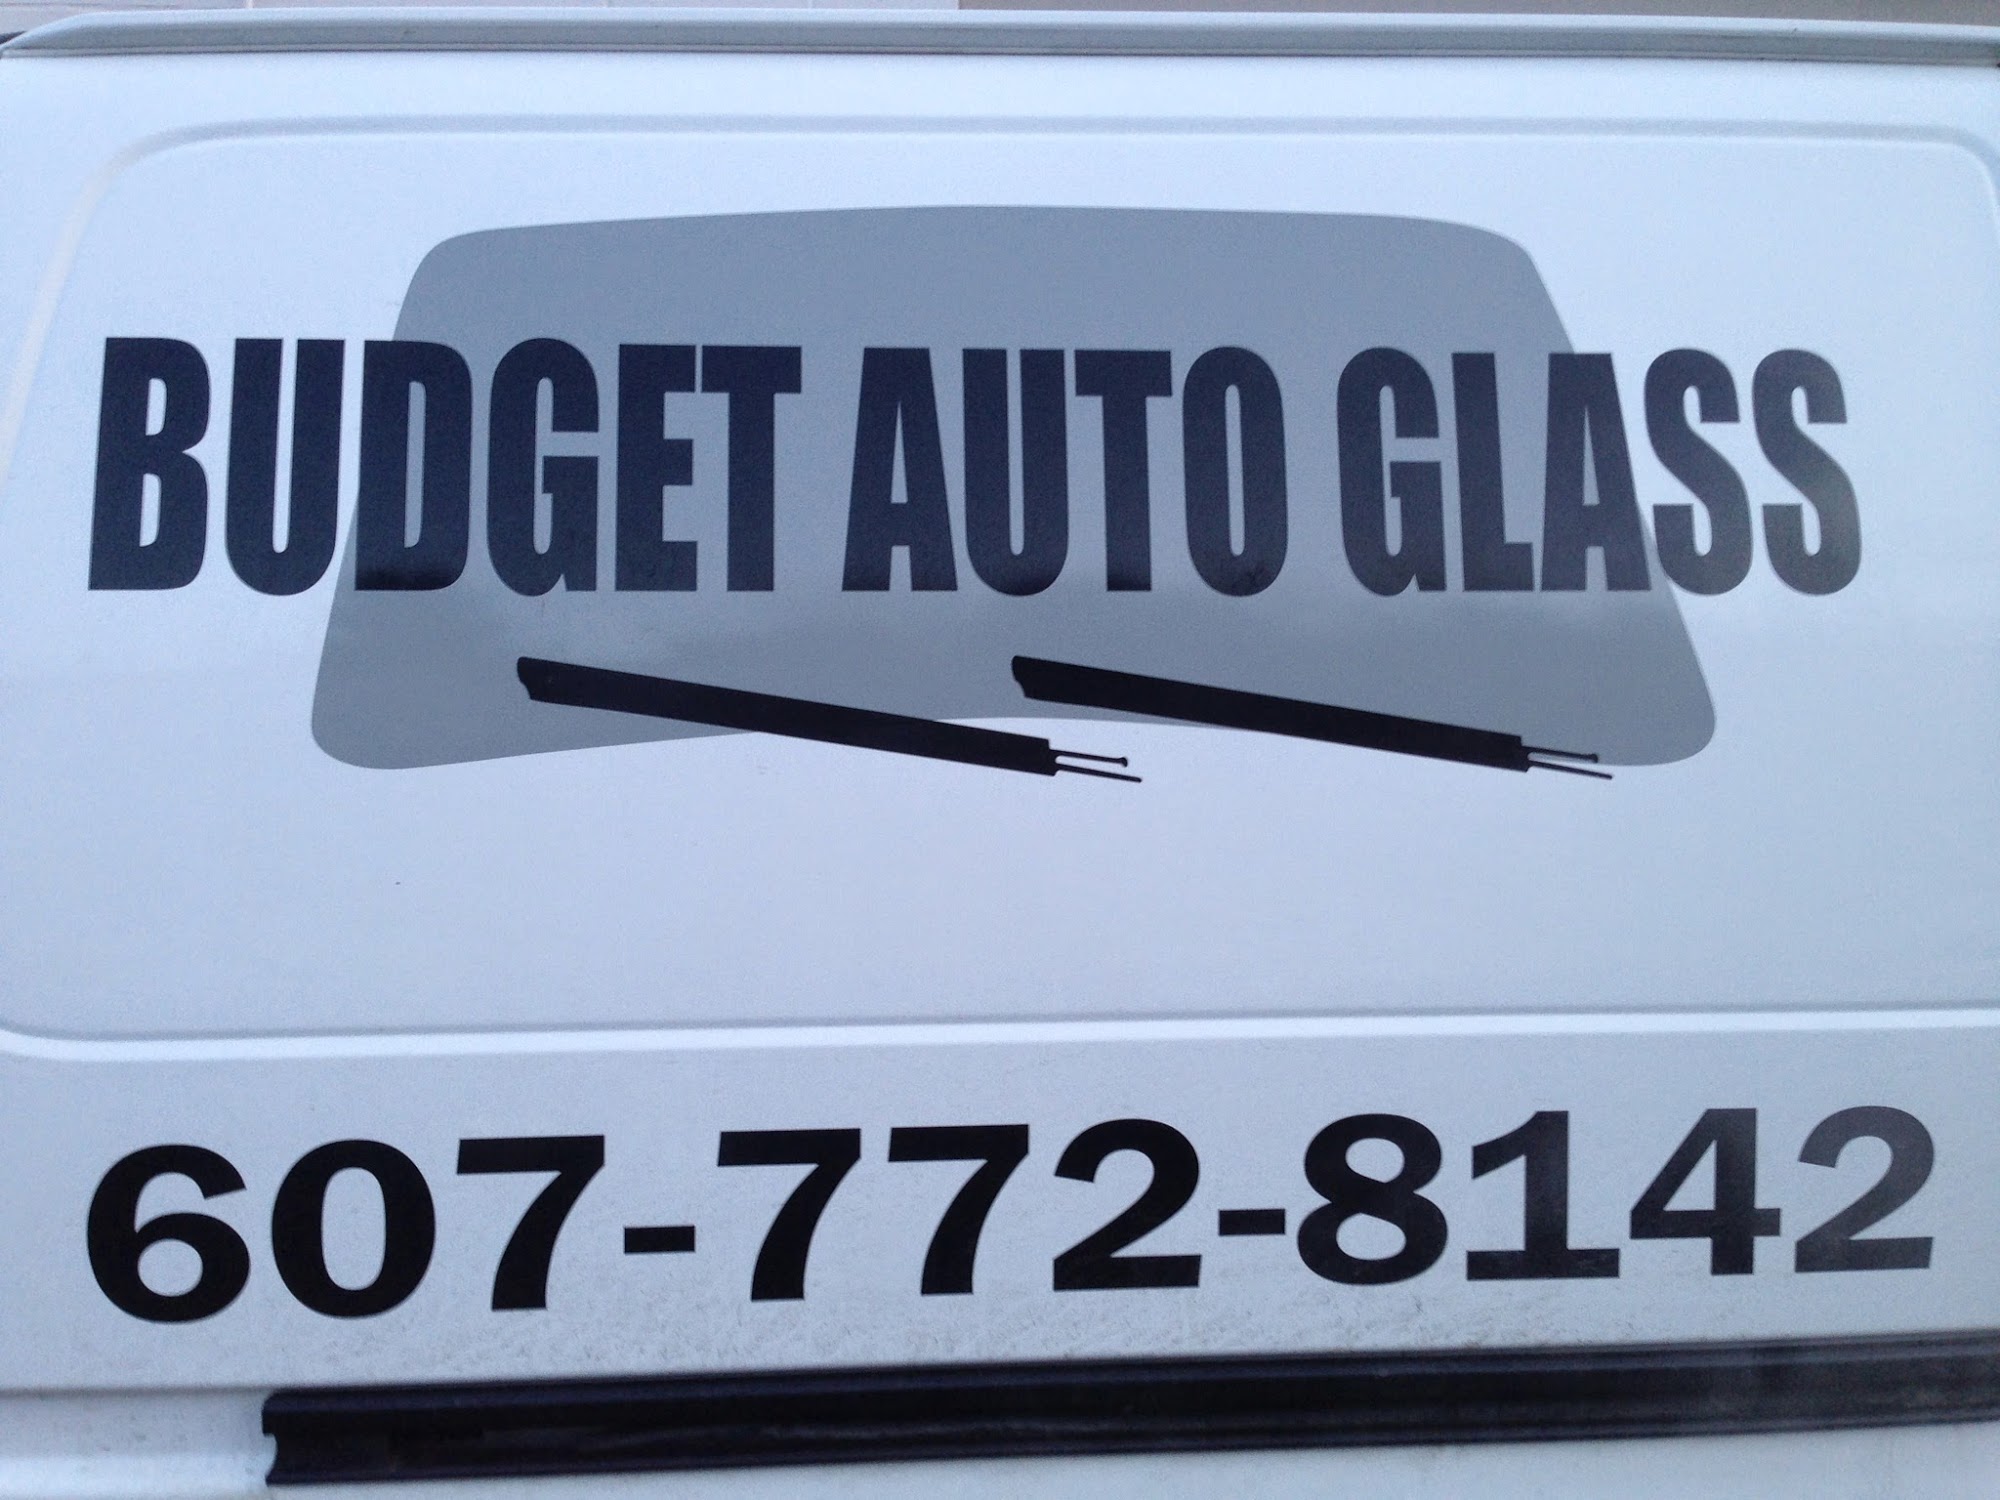 Budget Auto Glass